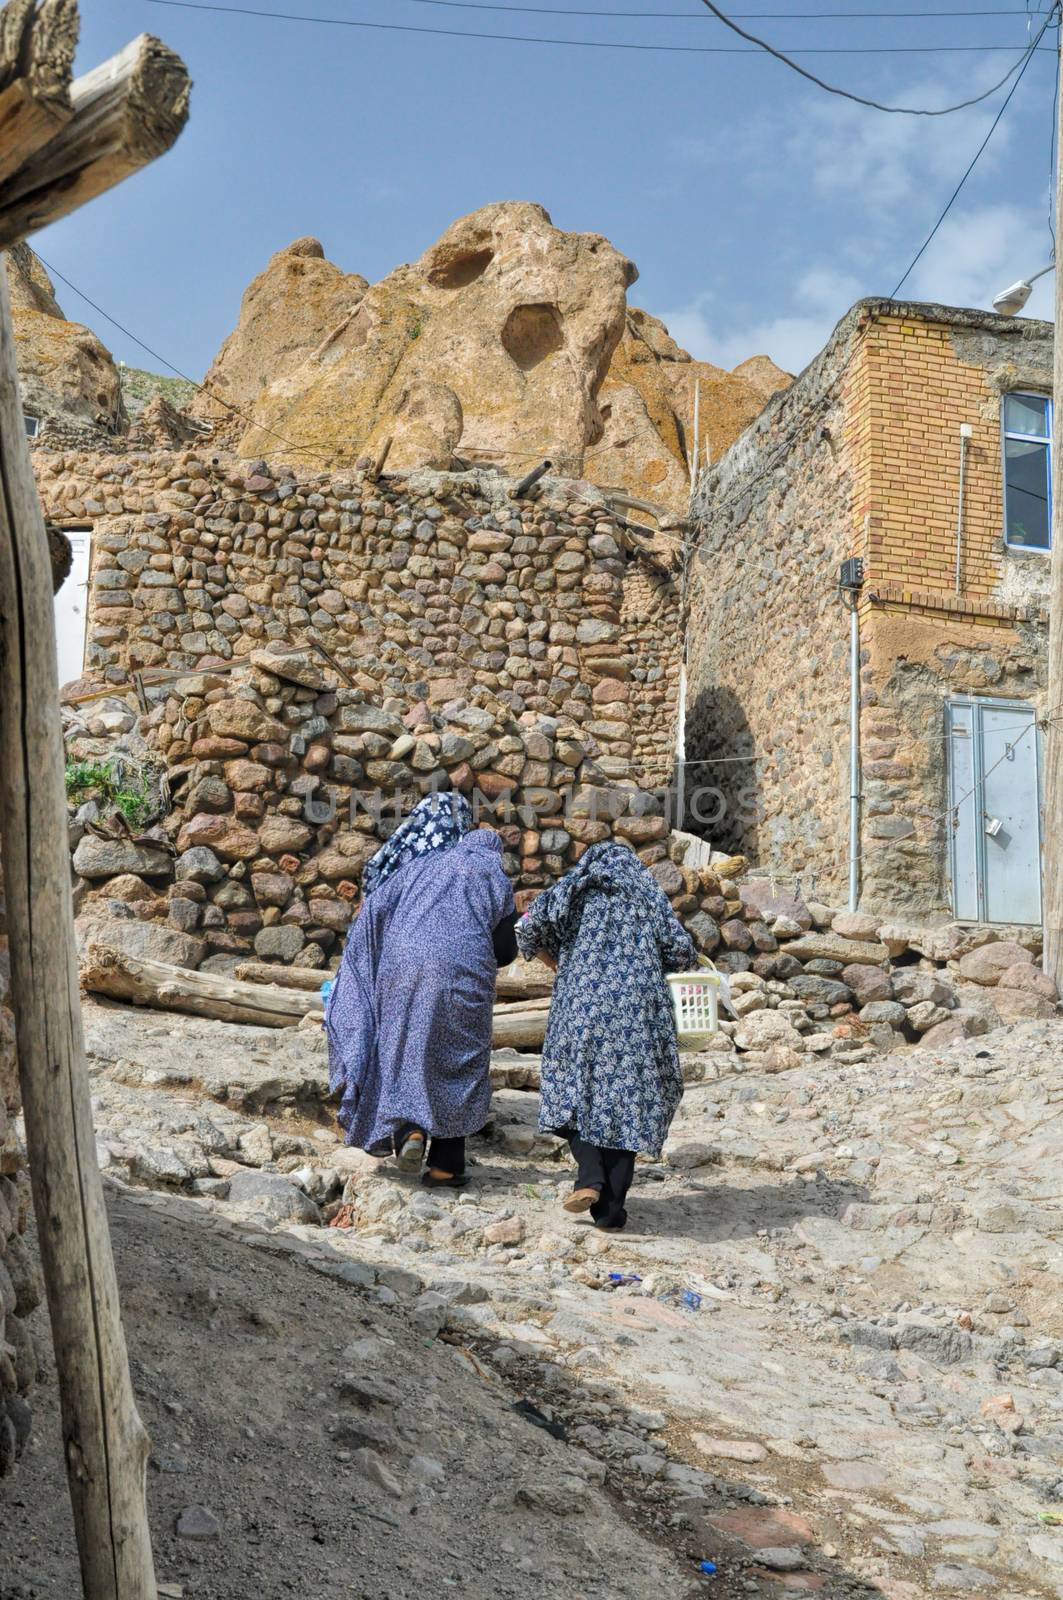 Two iranian women walking up the street in Kandovan village, northern Iran